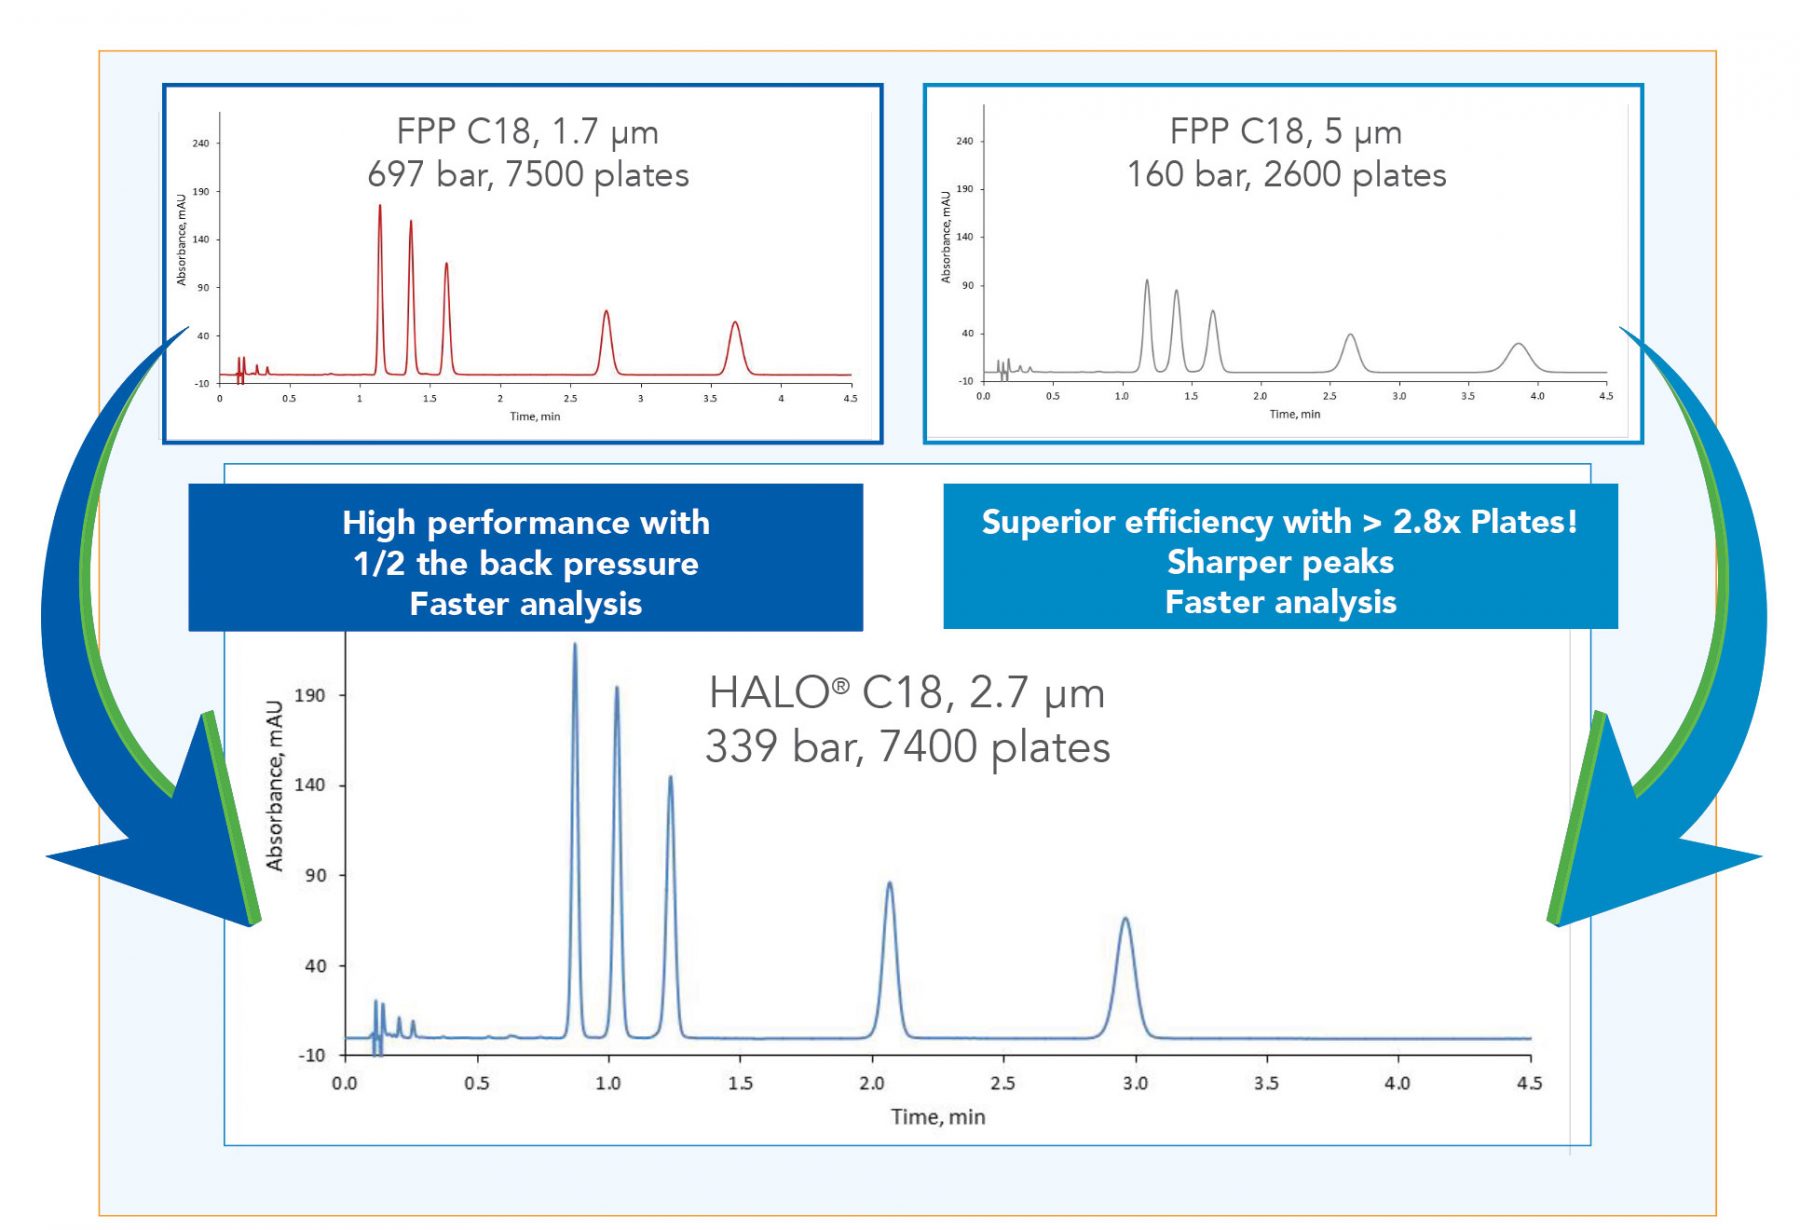 halo c18 column performance - chromatograph of halo vs fpp